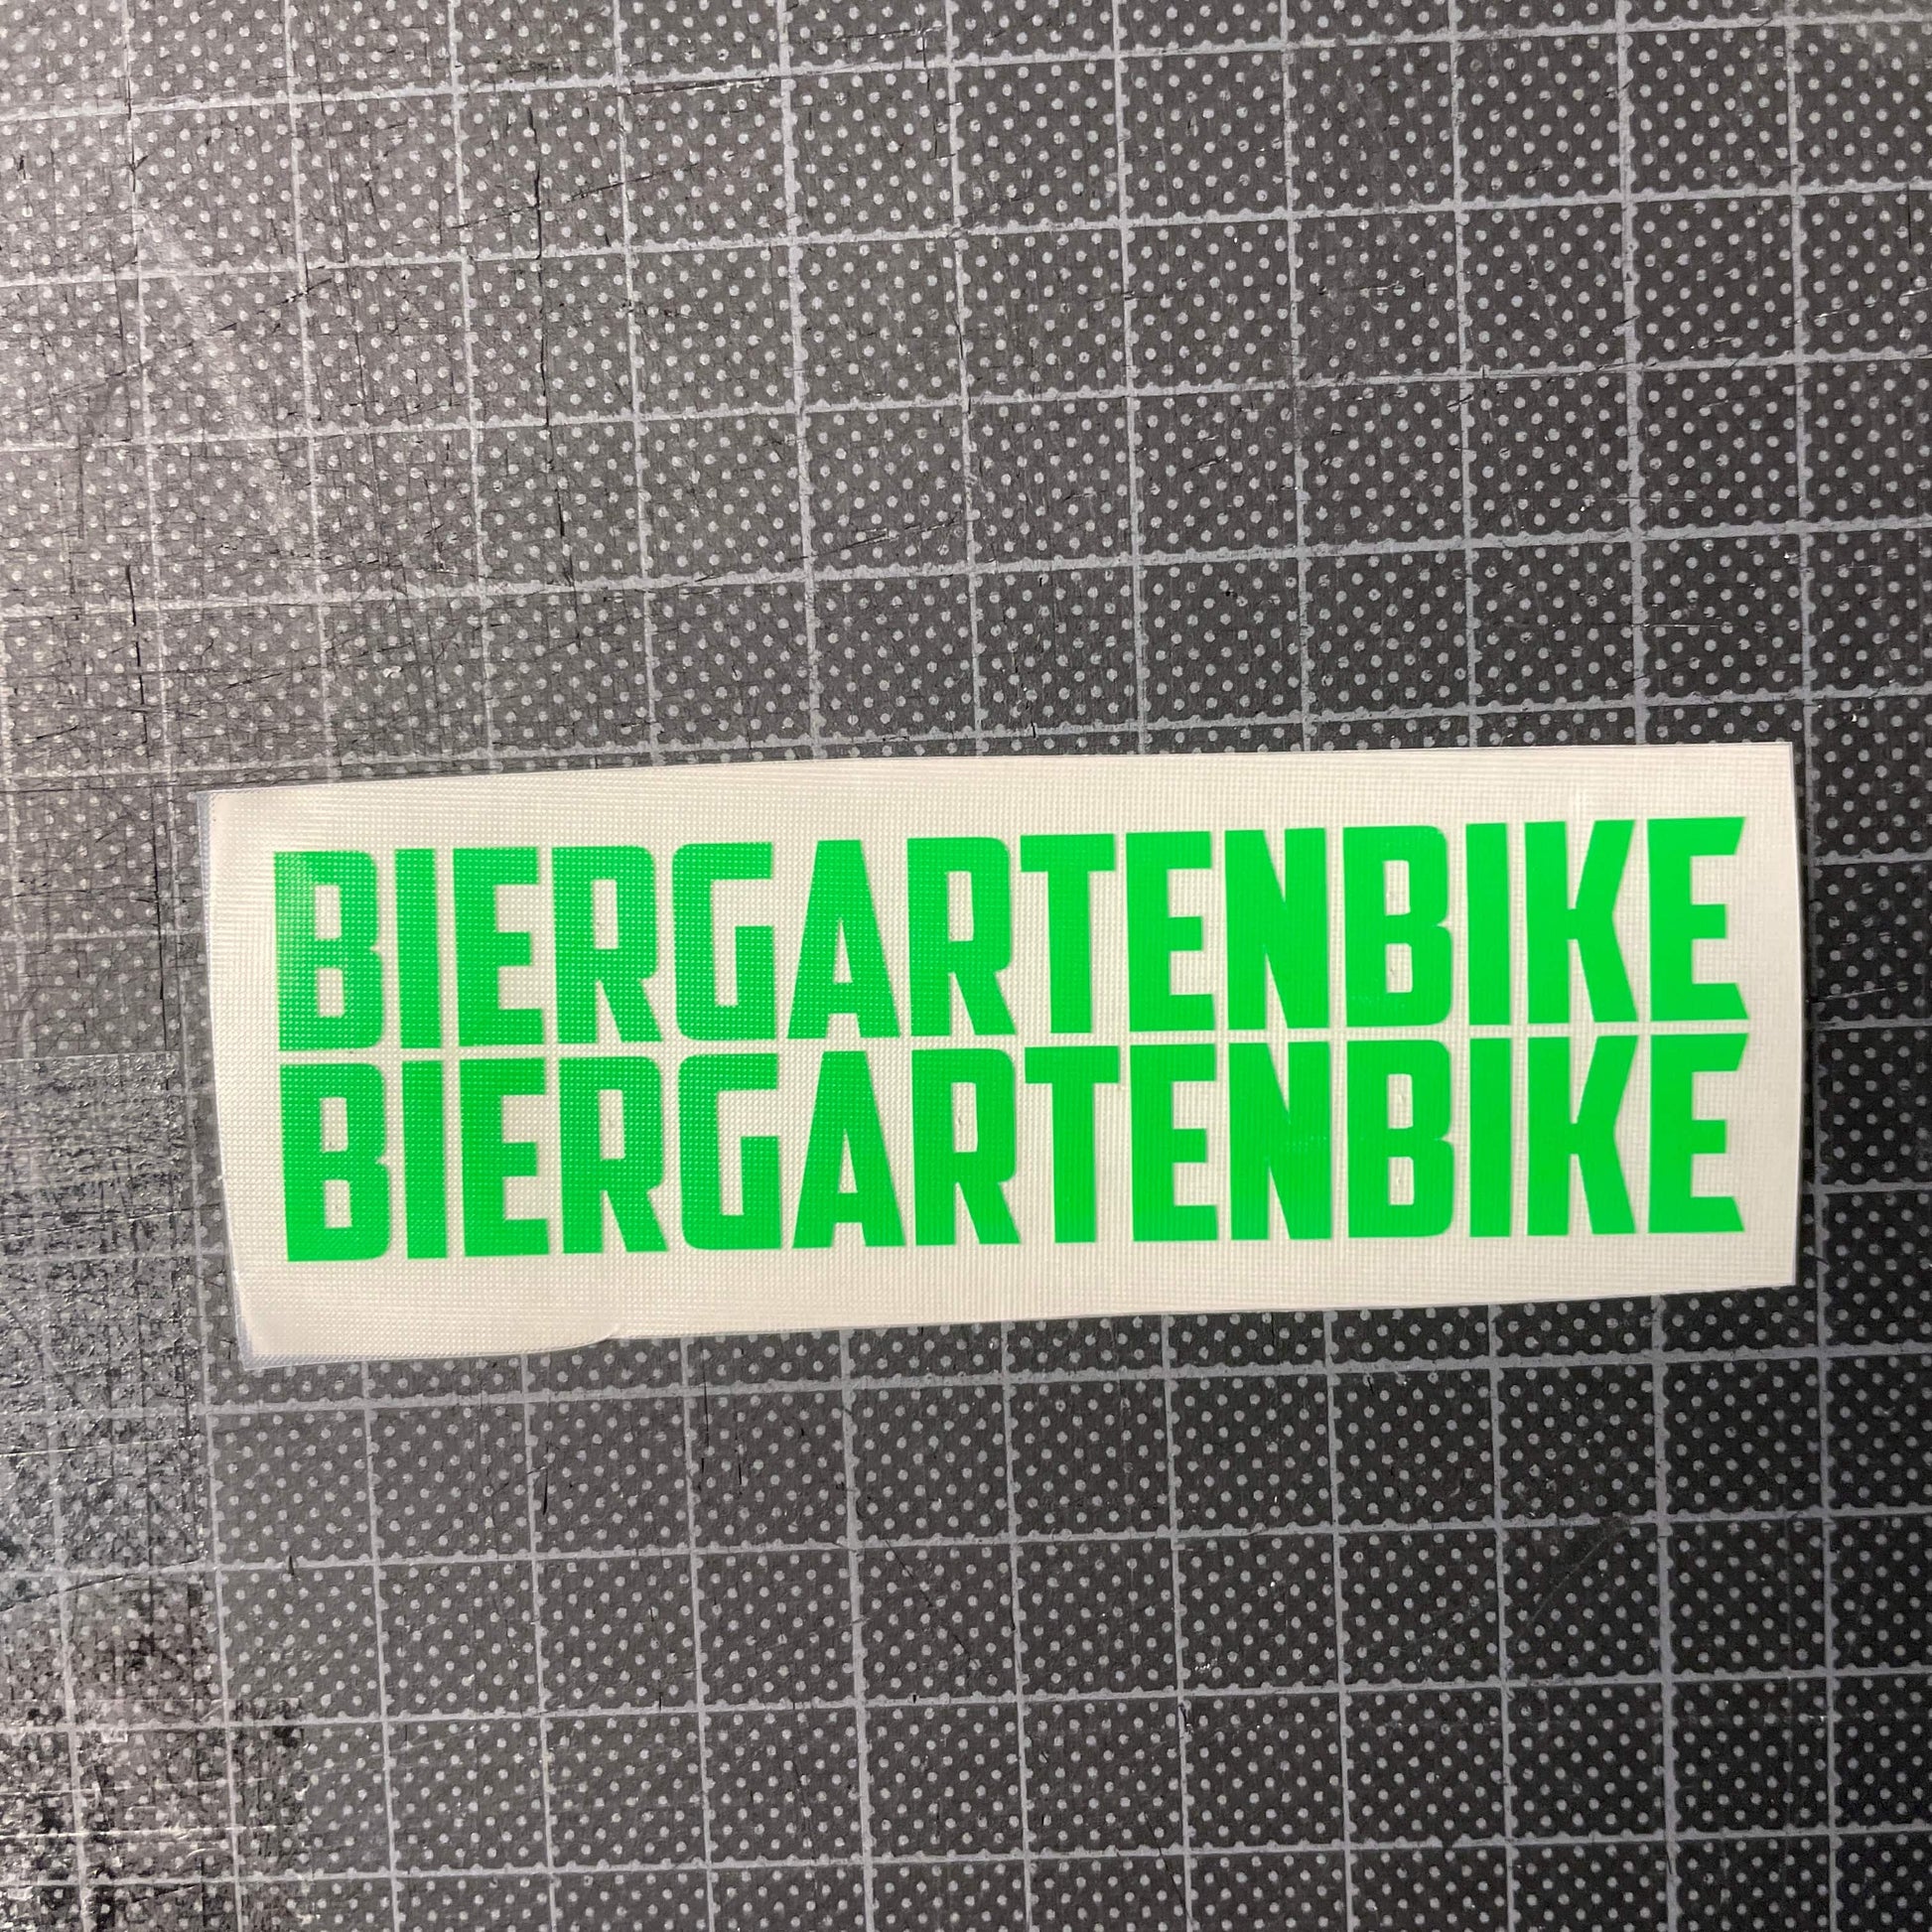 Sons of Battery - E-MTB Brand & Community Folien Neongrün / Biergartenbike EISDIELENBIKE / BIERGARTENBIKE E-Bike-Community